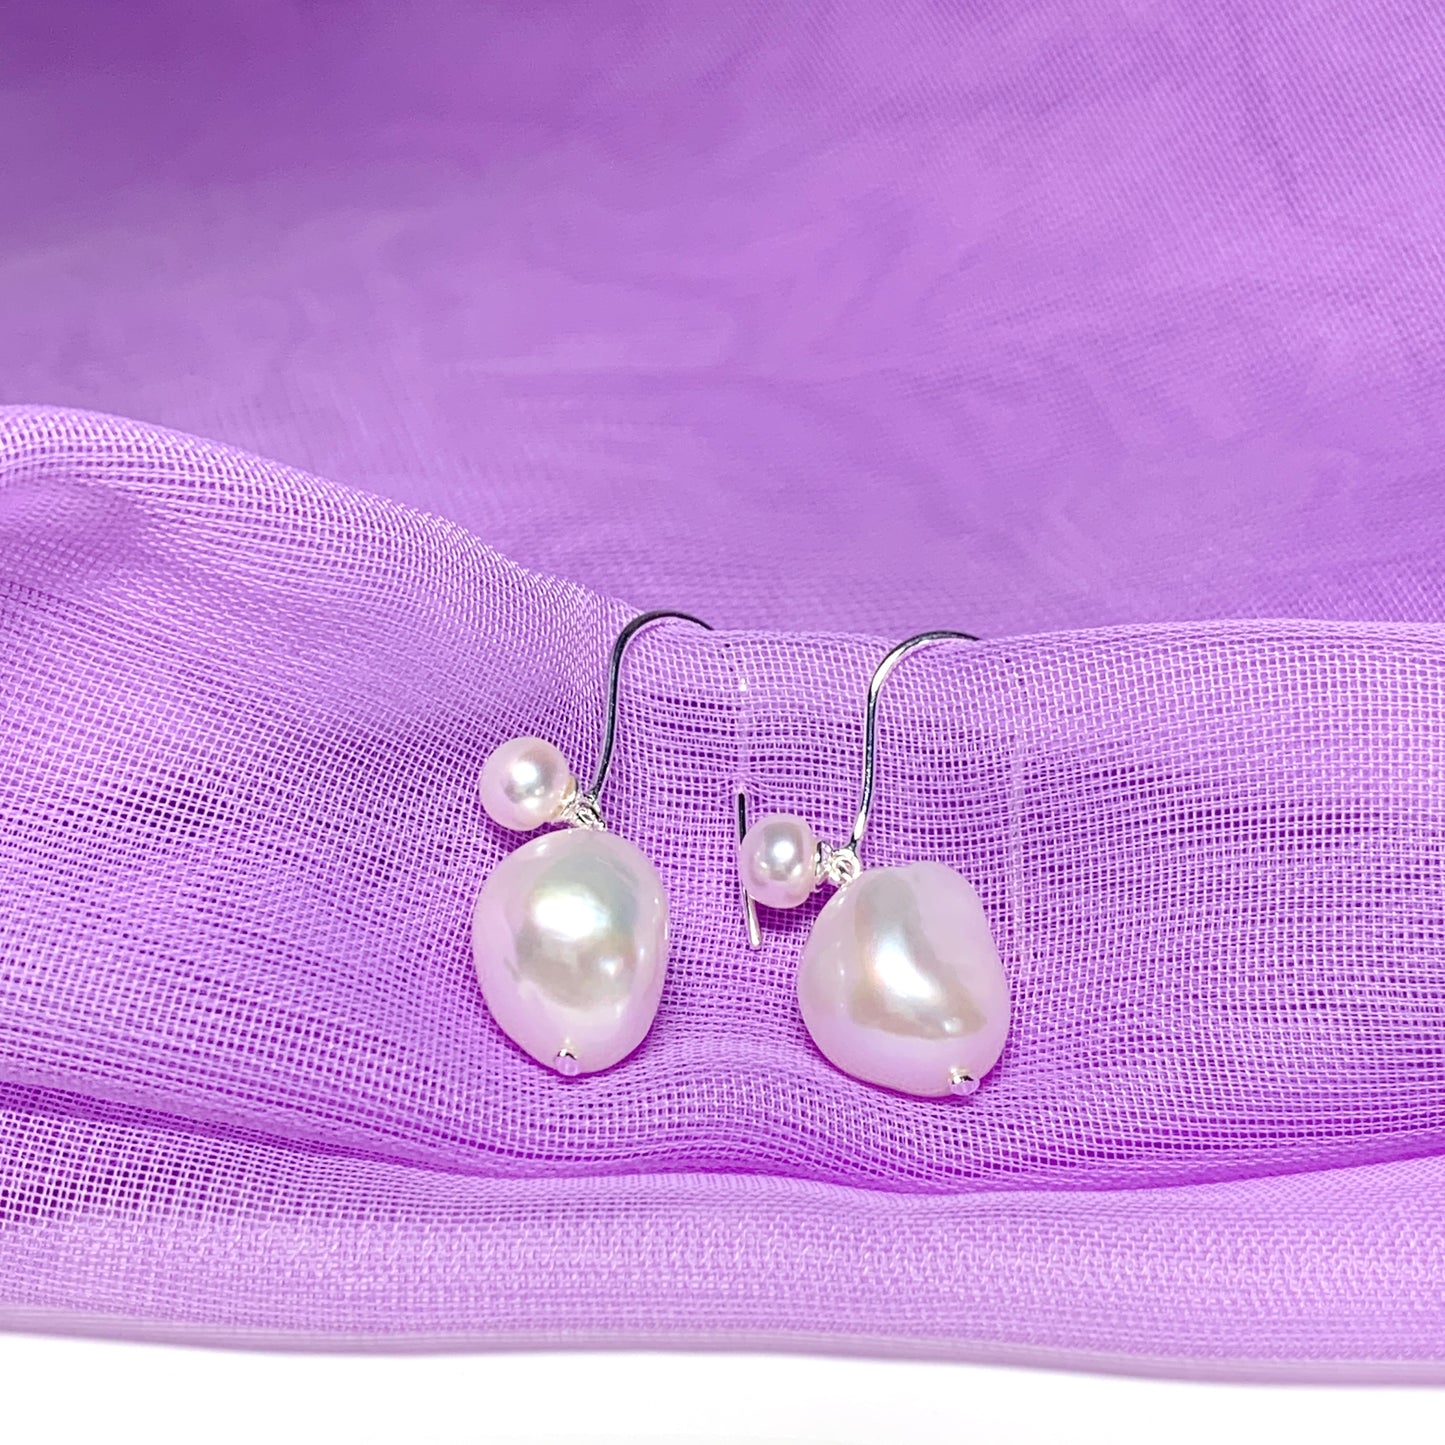 Real freshwater pearl double drop earrings